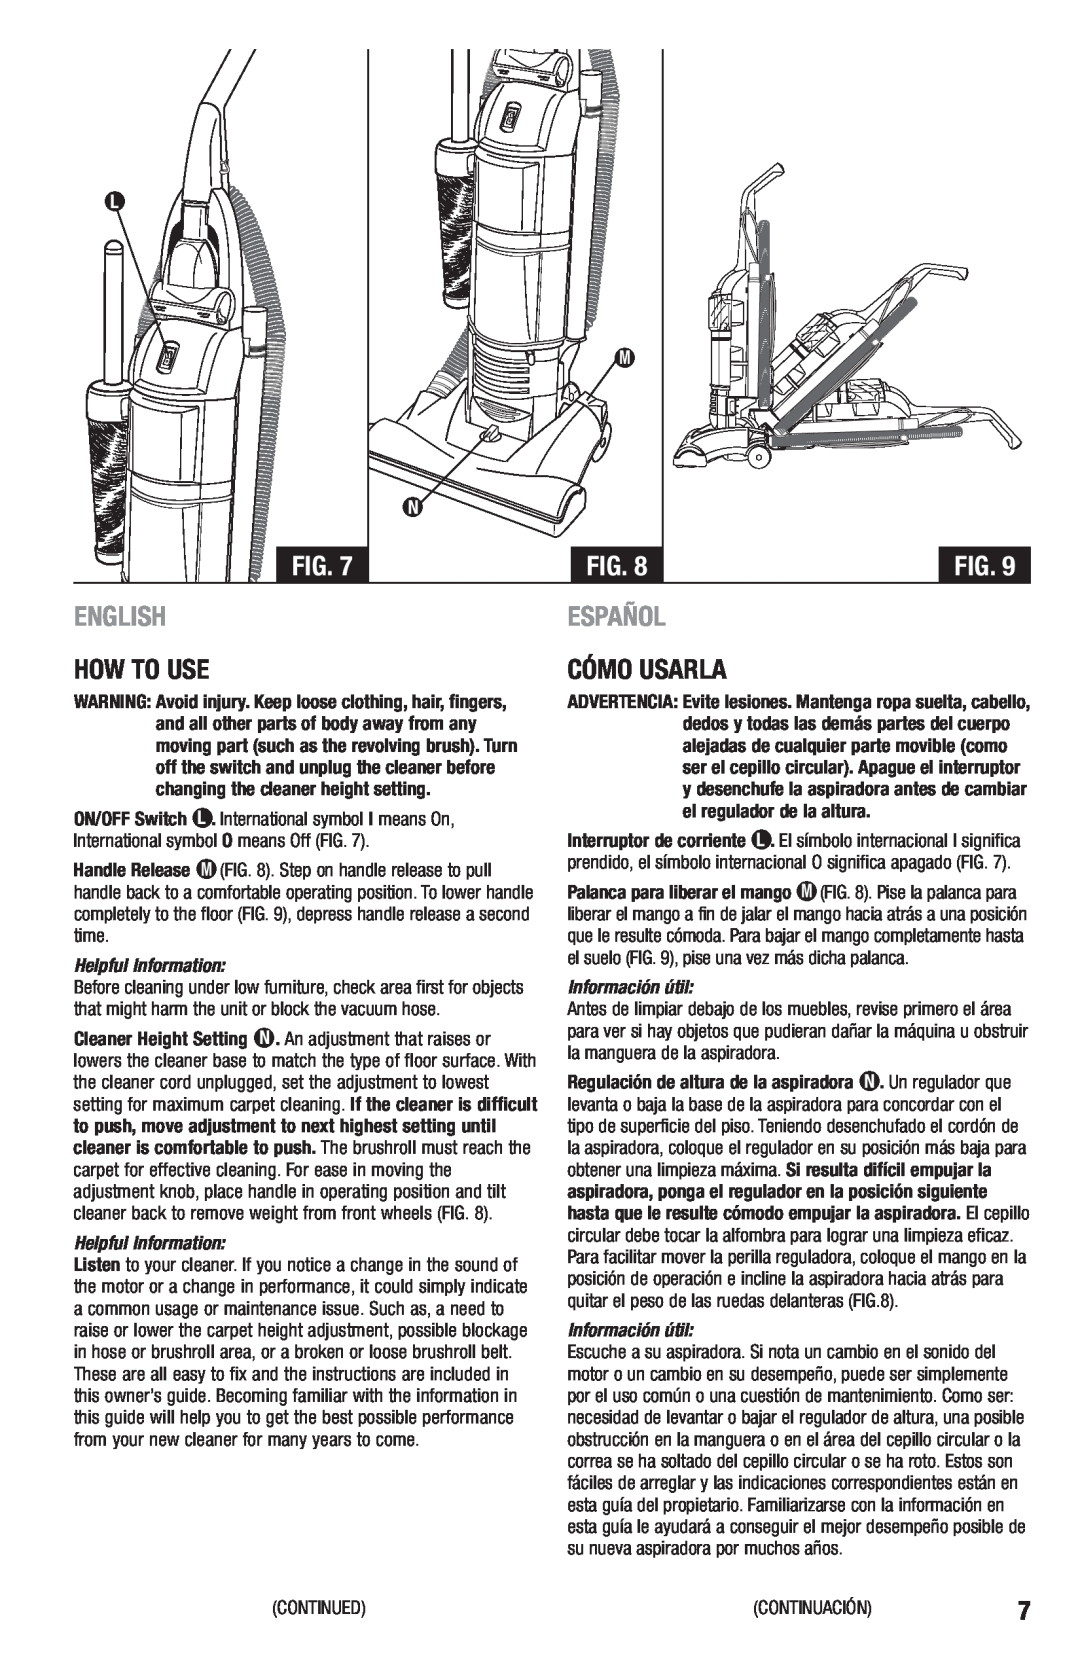 Eureka 2970-2999 Series manual English, Español, Helpful Information, Información útil 